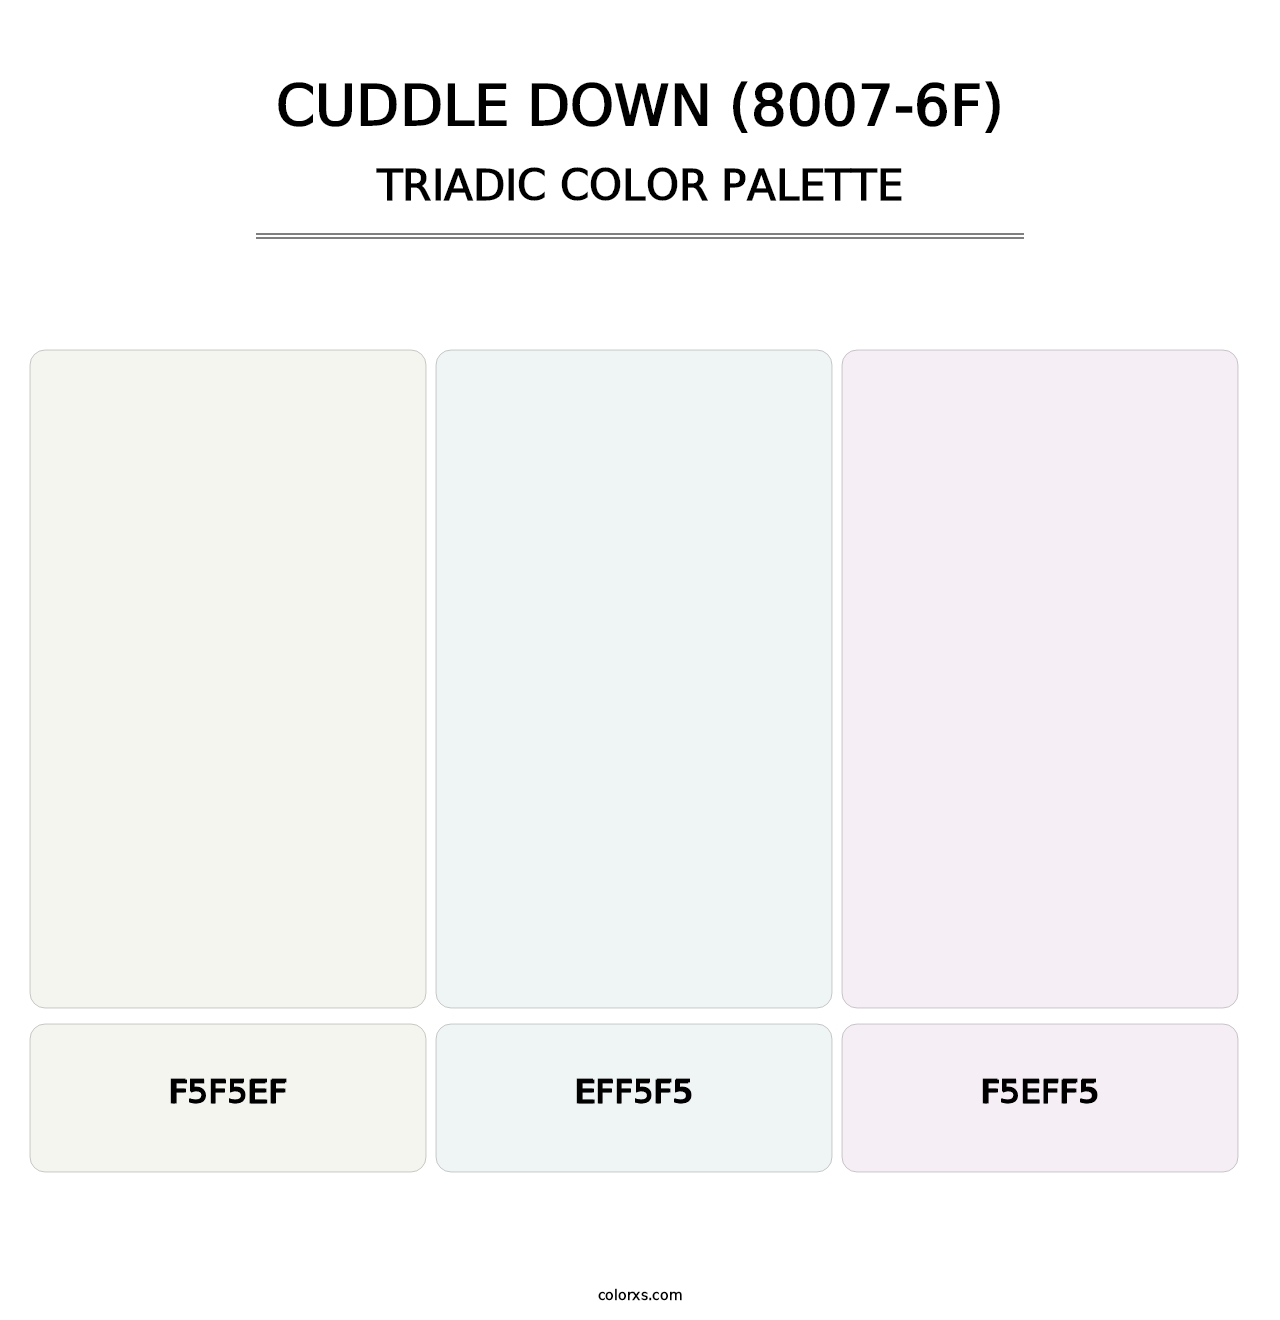 Cuddle Down (8007-6F) - Triadic Color Palette